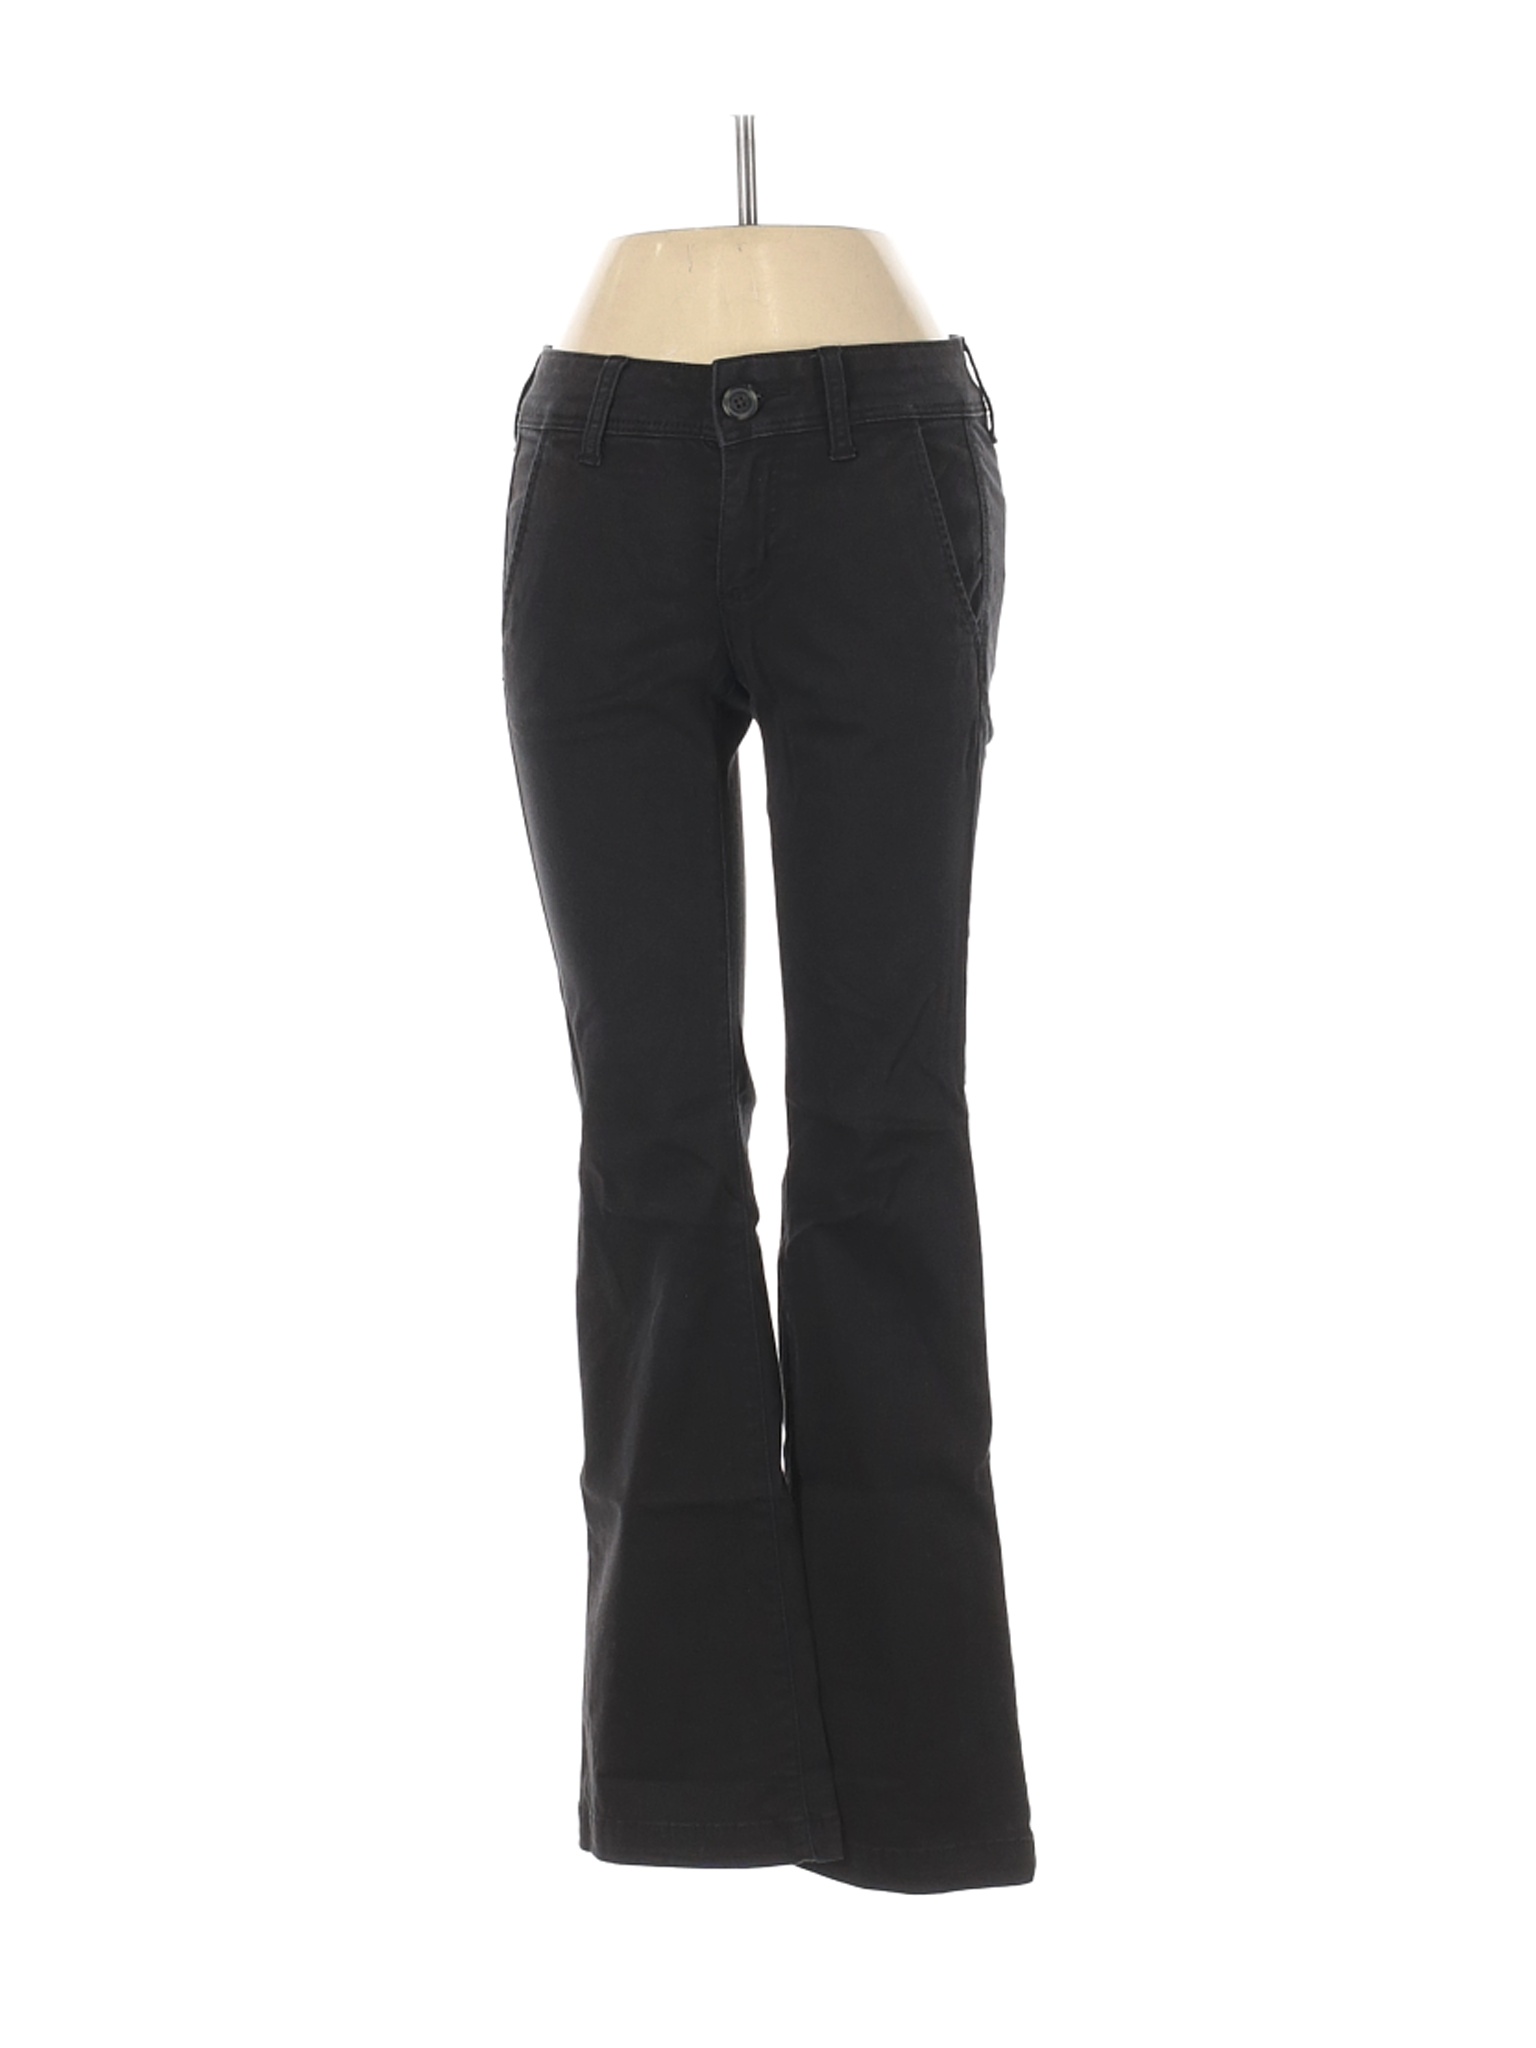 American Eagle Outfitters Women Black Jeans 0 | eBay